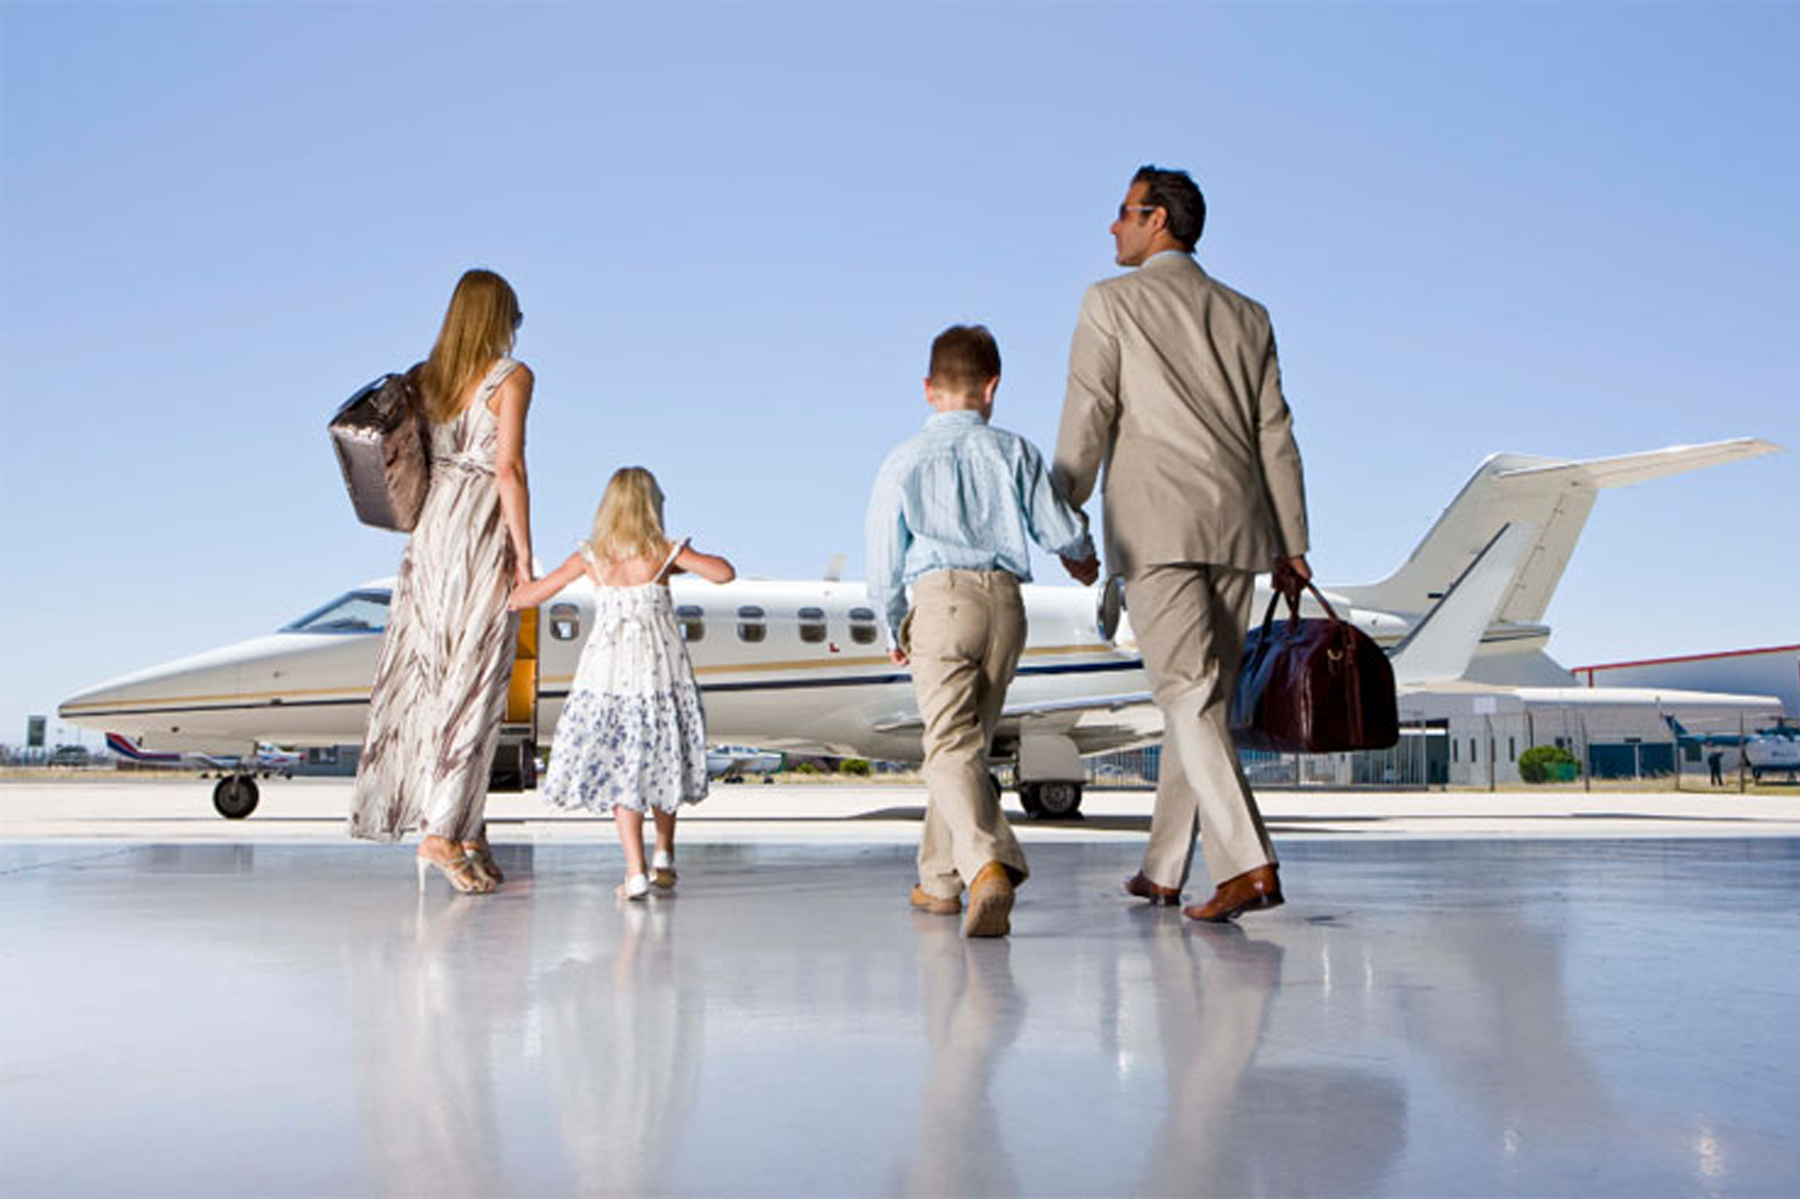 Privat family. Семья путешествует. Богатая семья. Путешествие на самолете. Путешествие с семьей.